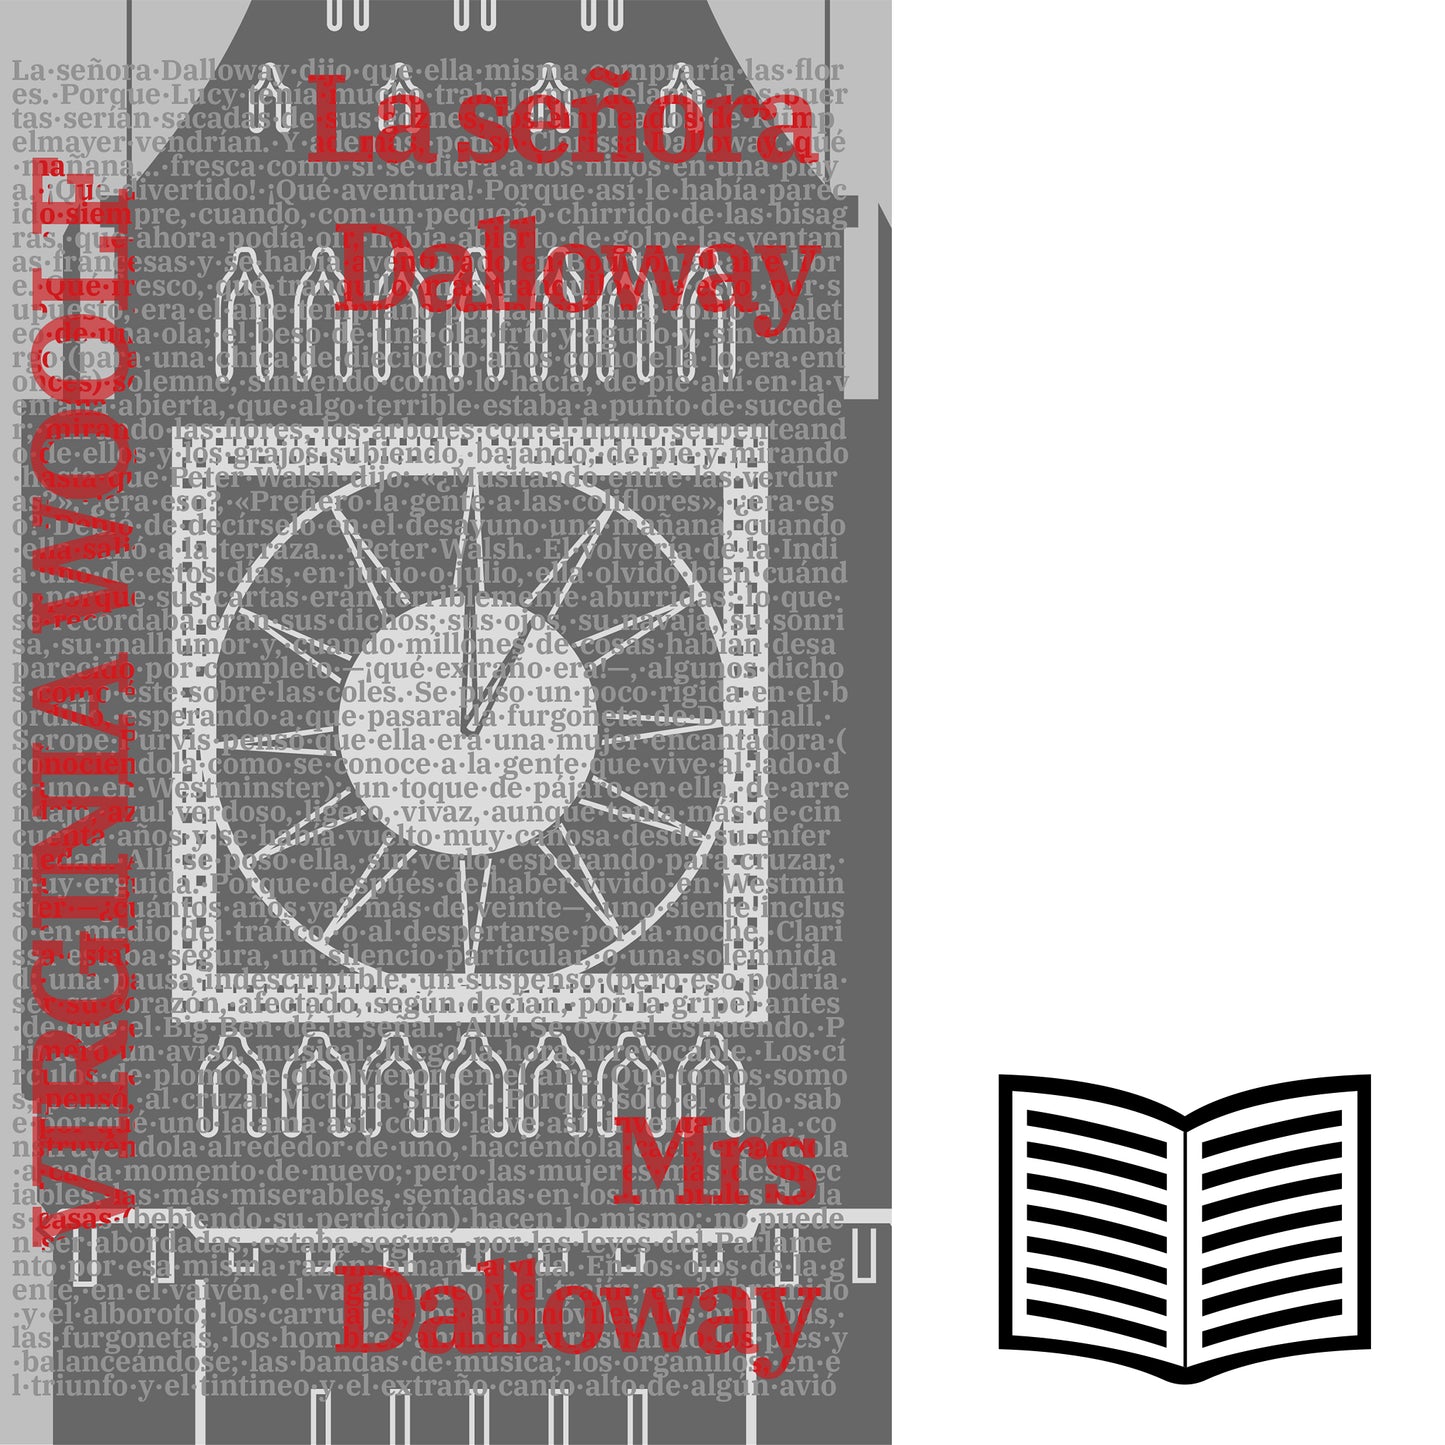 La señora Dalloway - Mrs Dalloway | Libro bilingüe - Español / Inglés